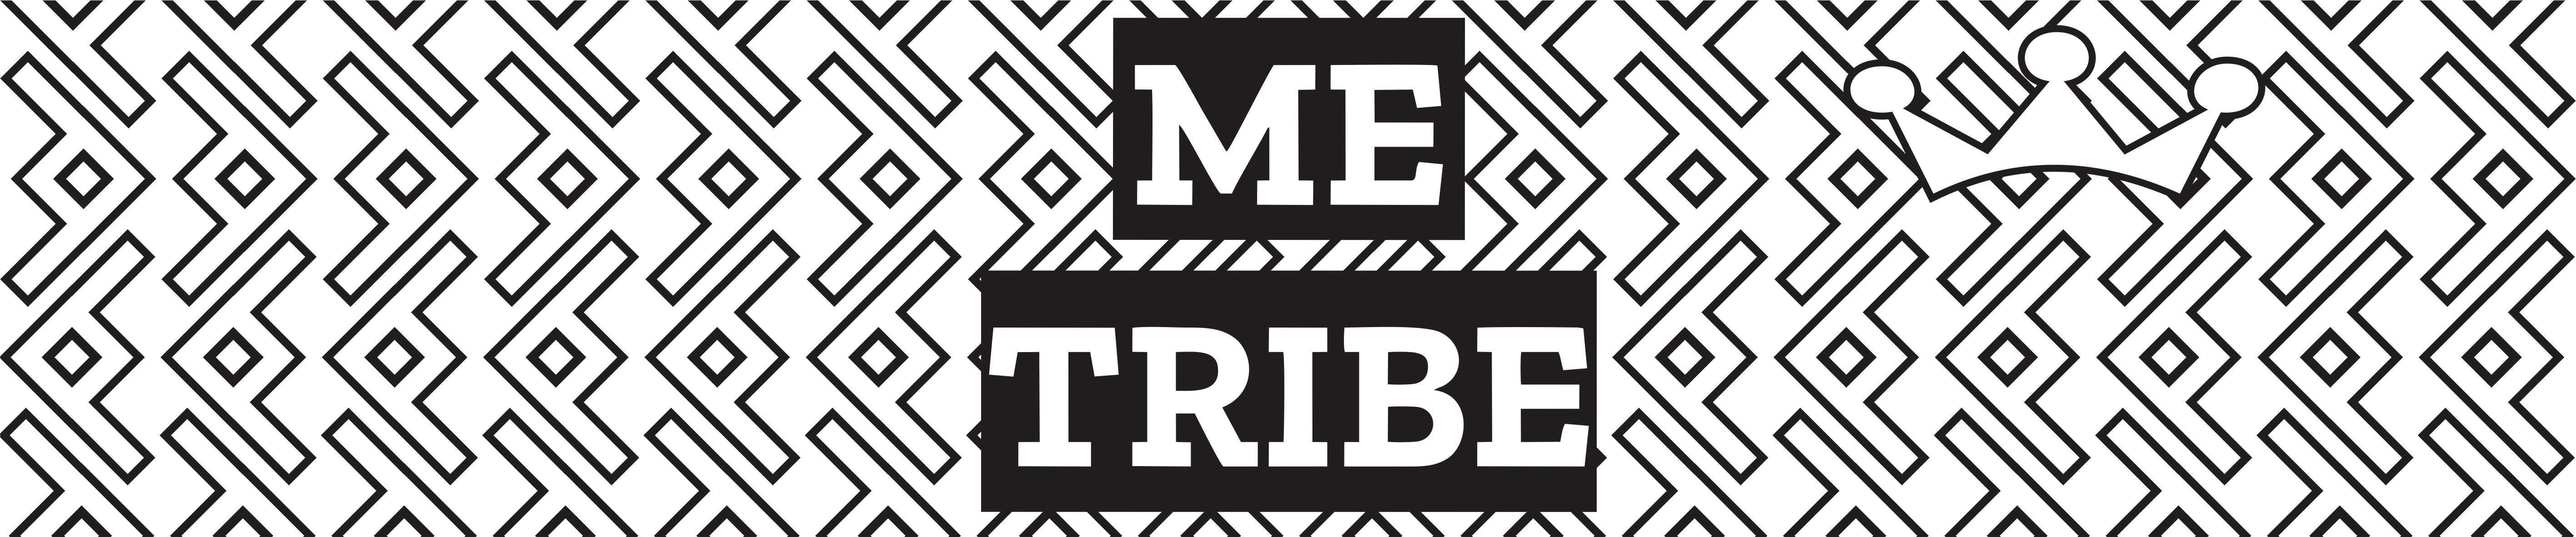 Me Tribe : Default